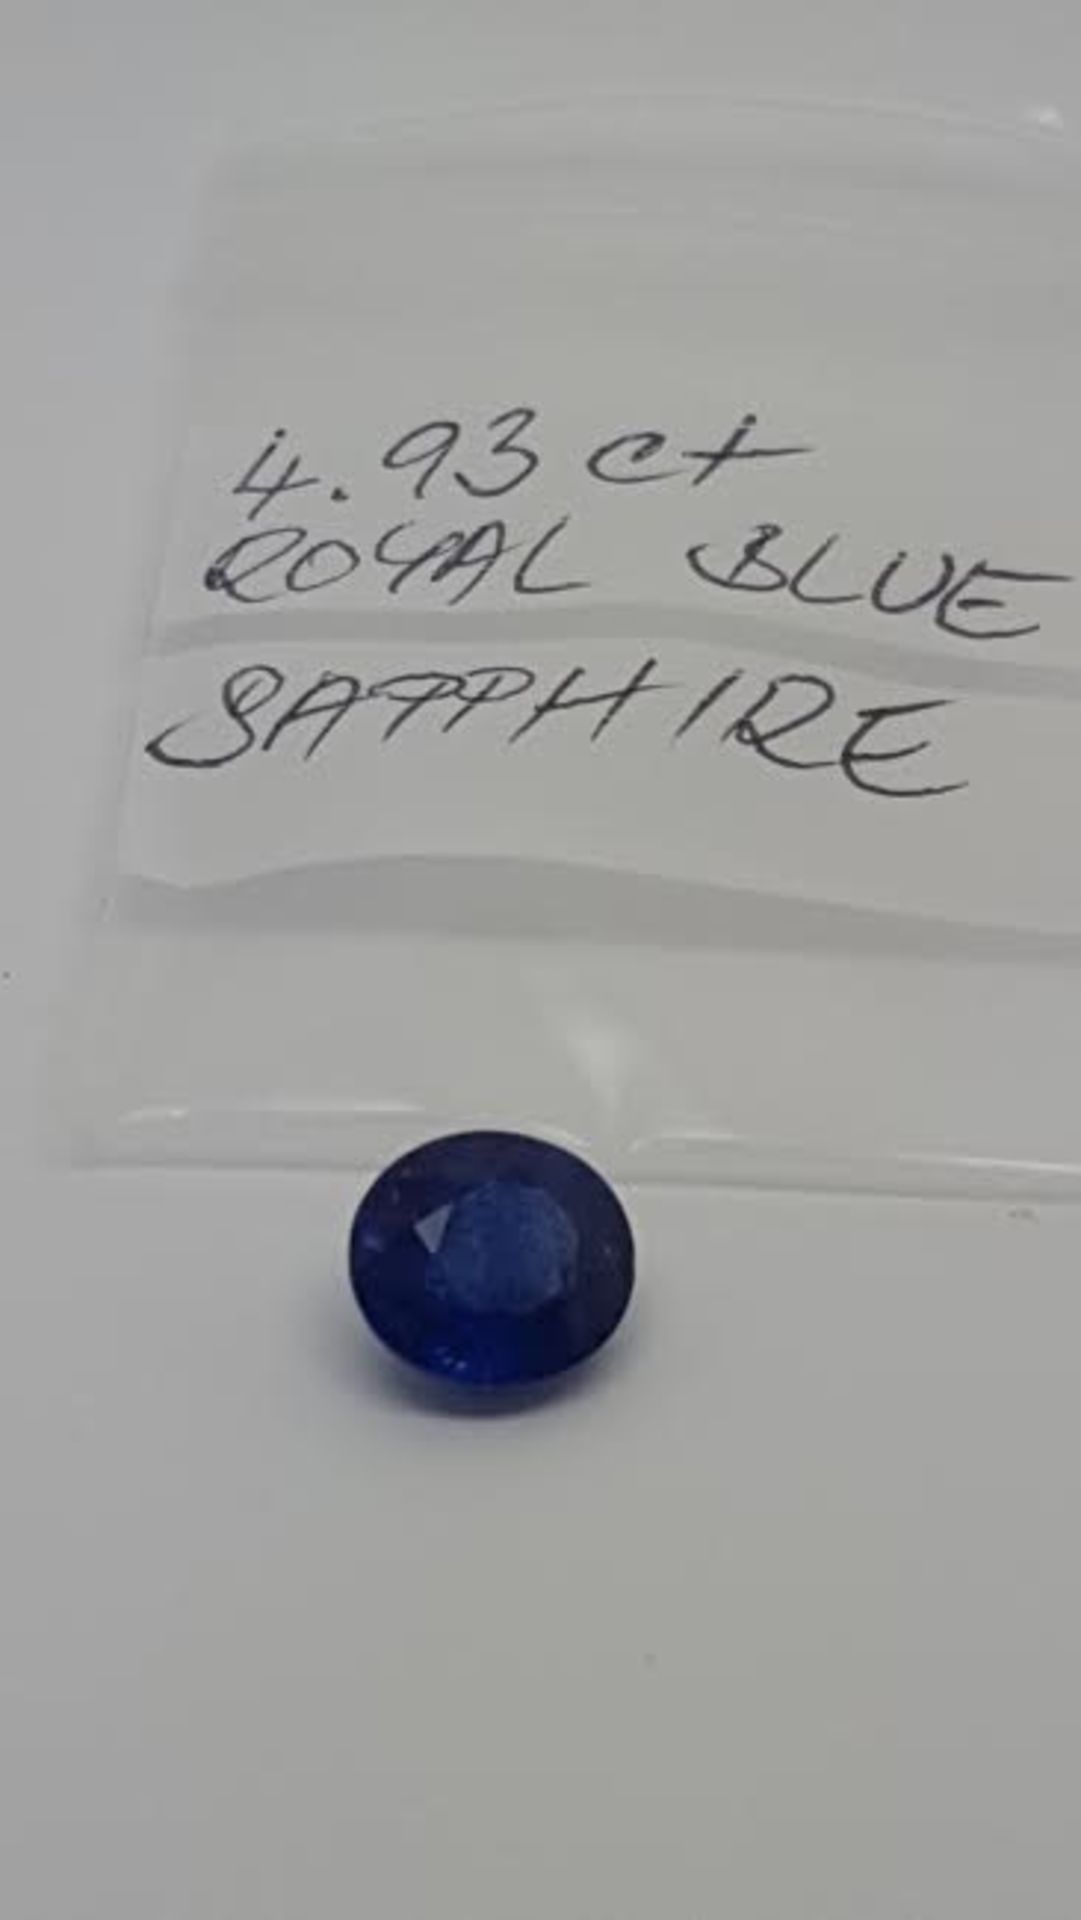 4.93 ct royal blue sapphire